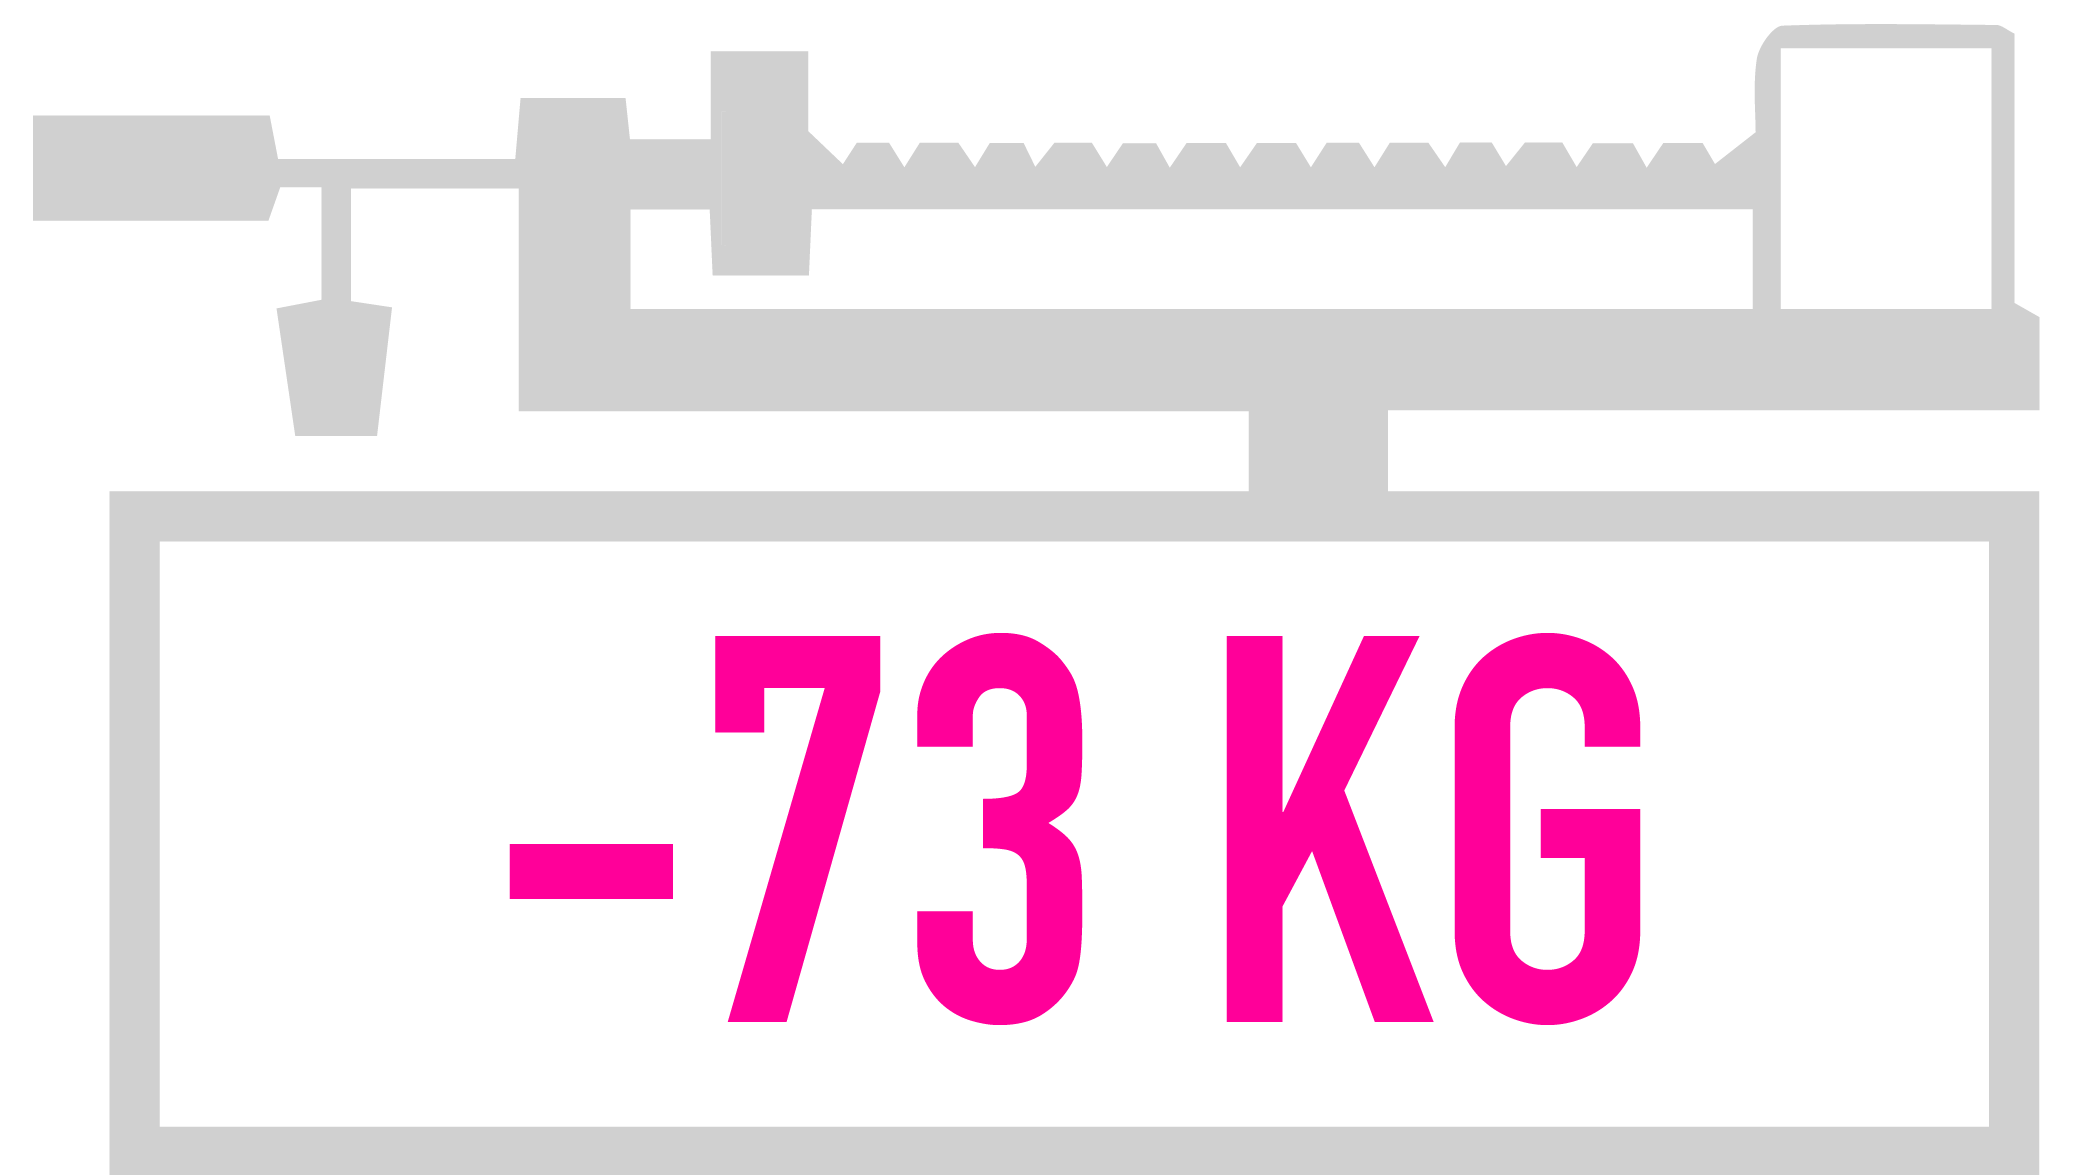  73kg 01